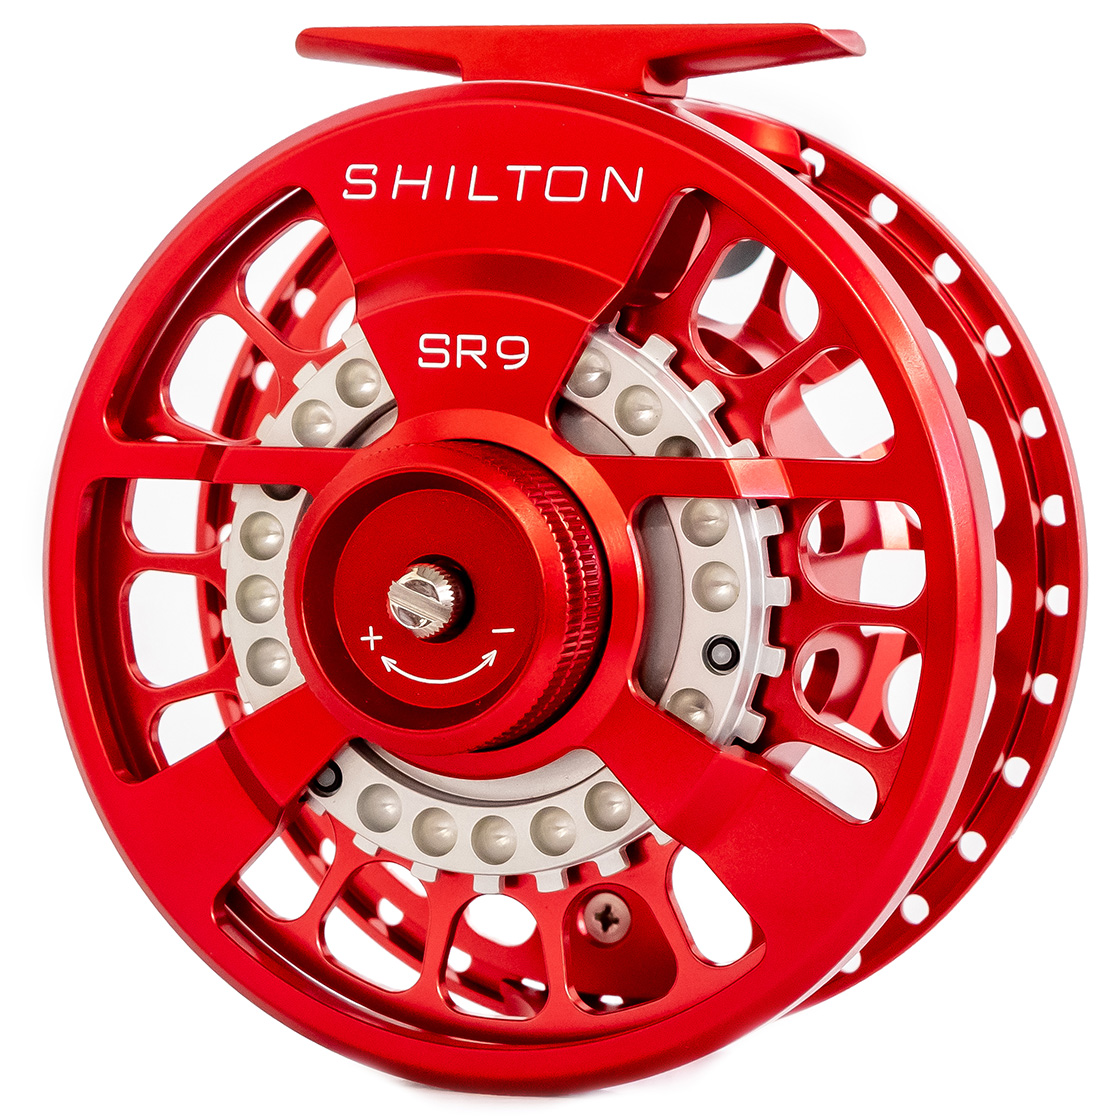 Shilton SR10 Fly Reel - New